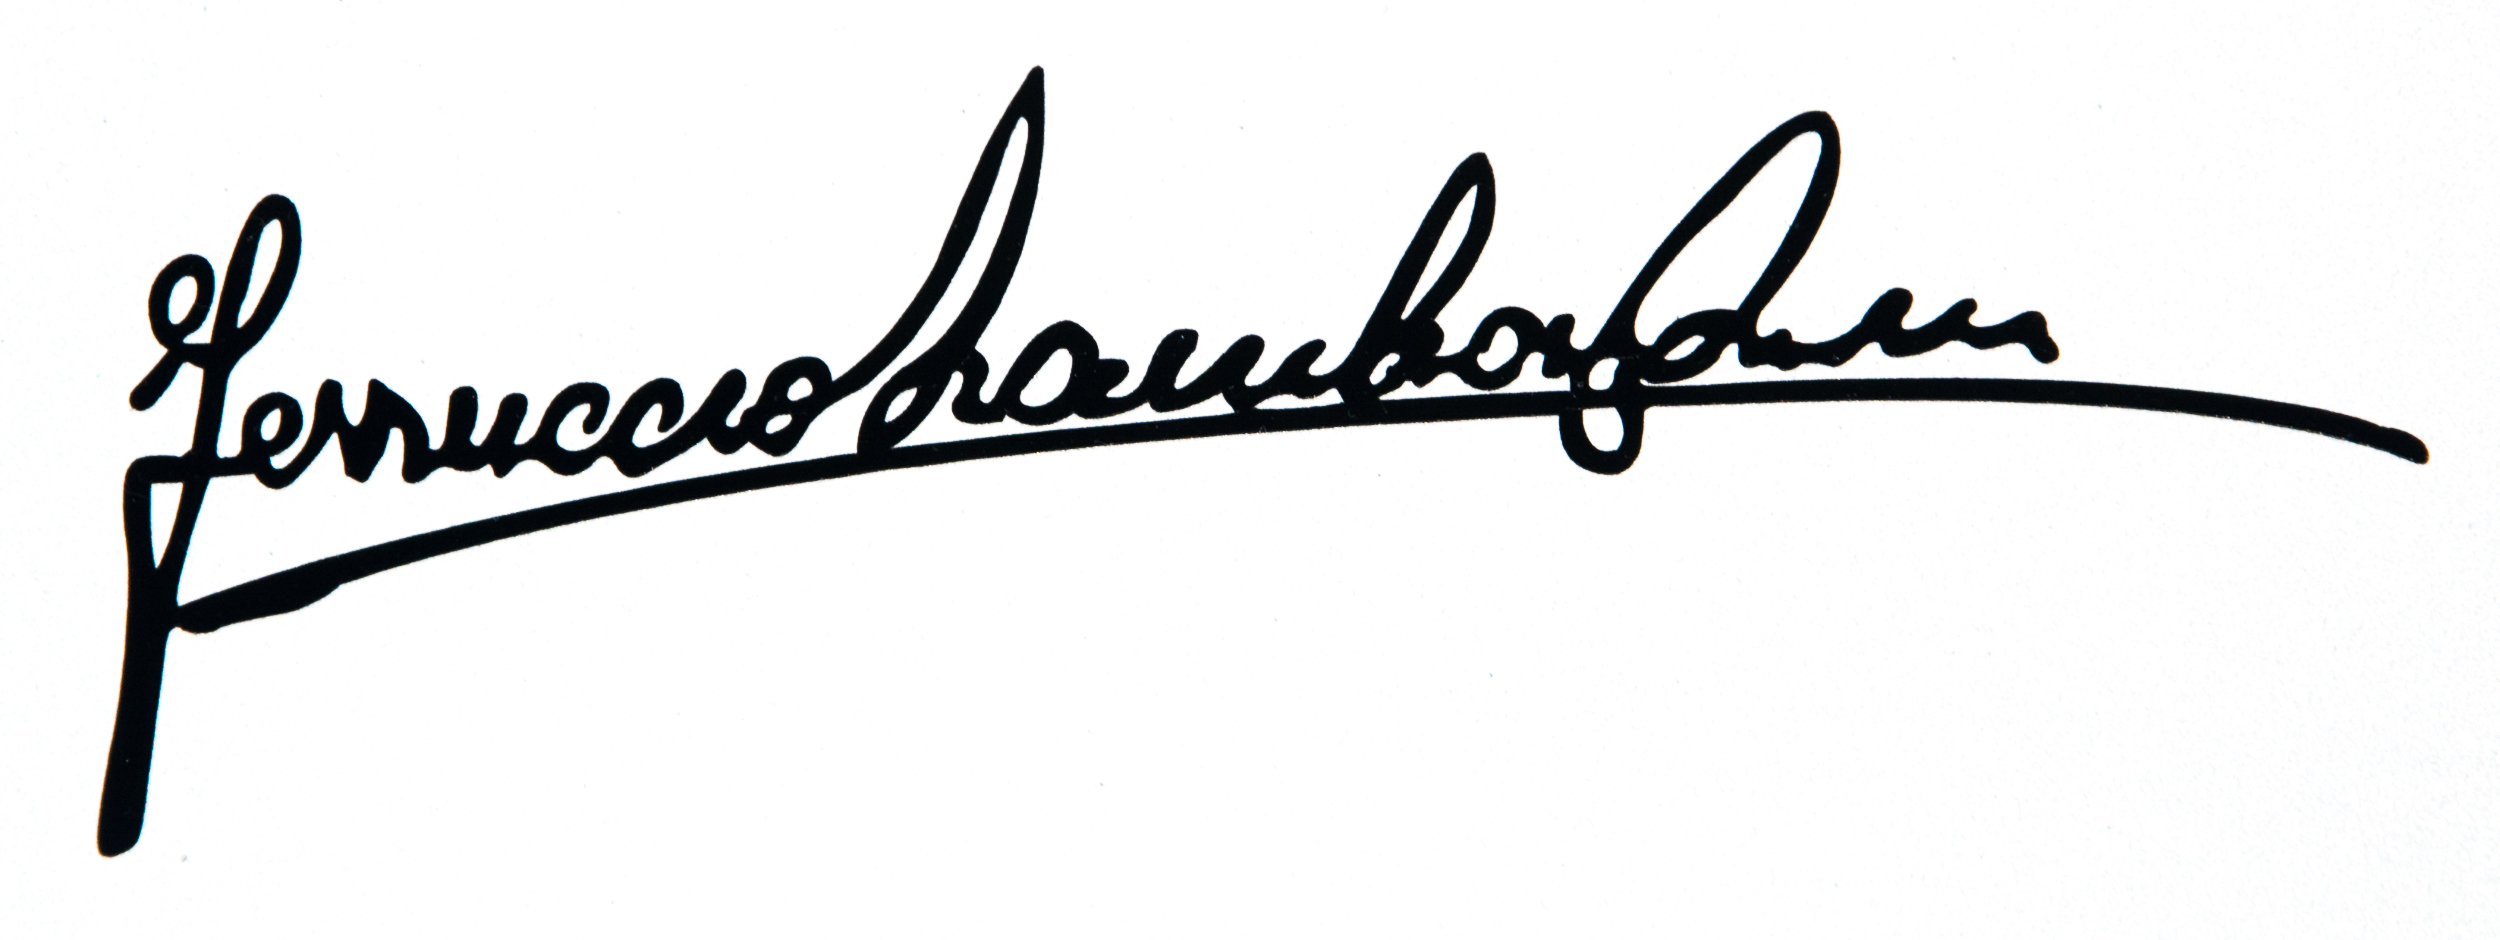 Ferruccio Lamborghini signature